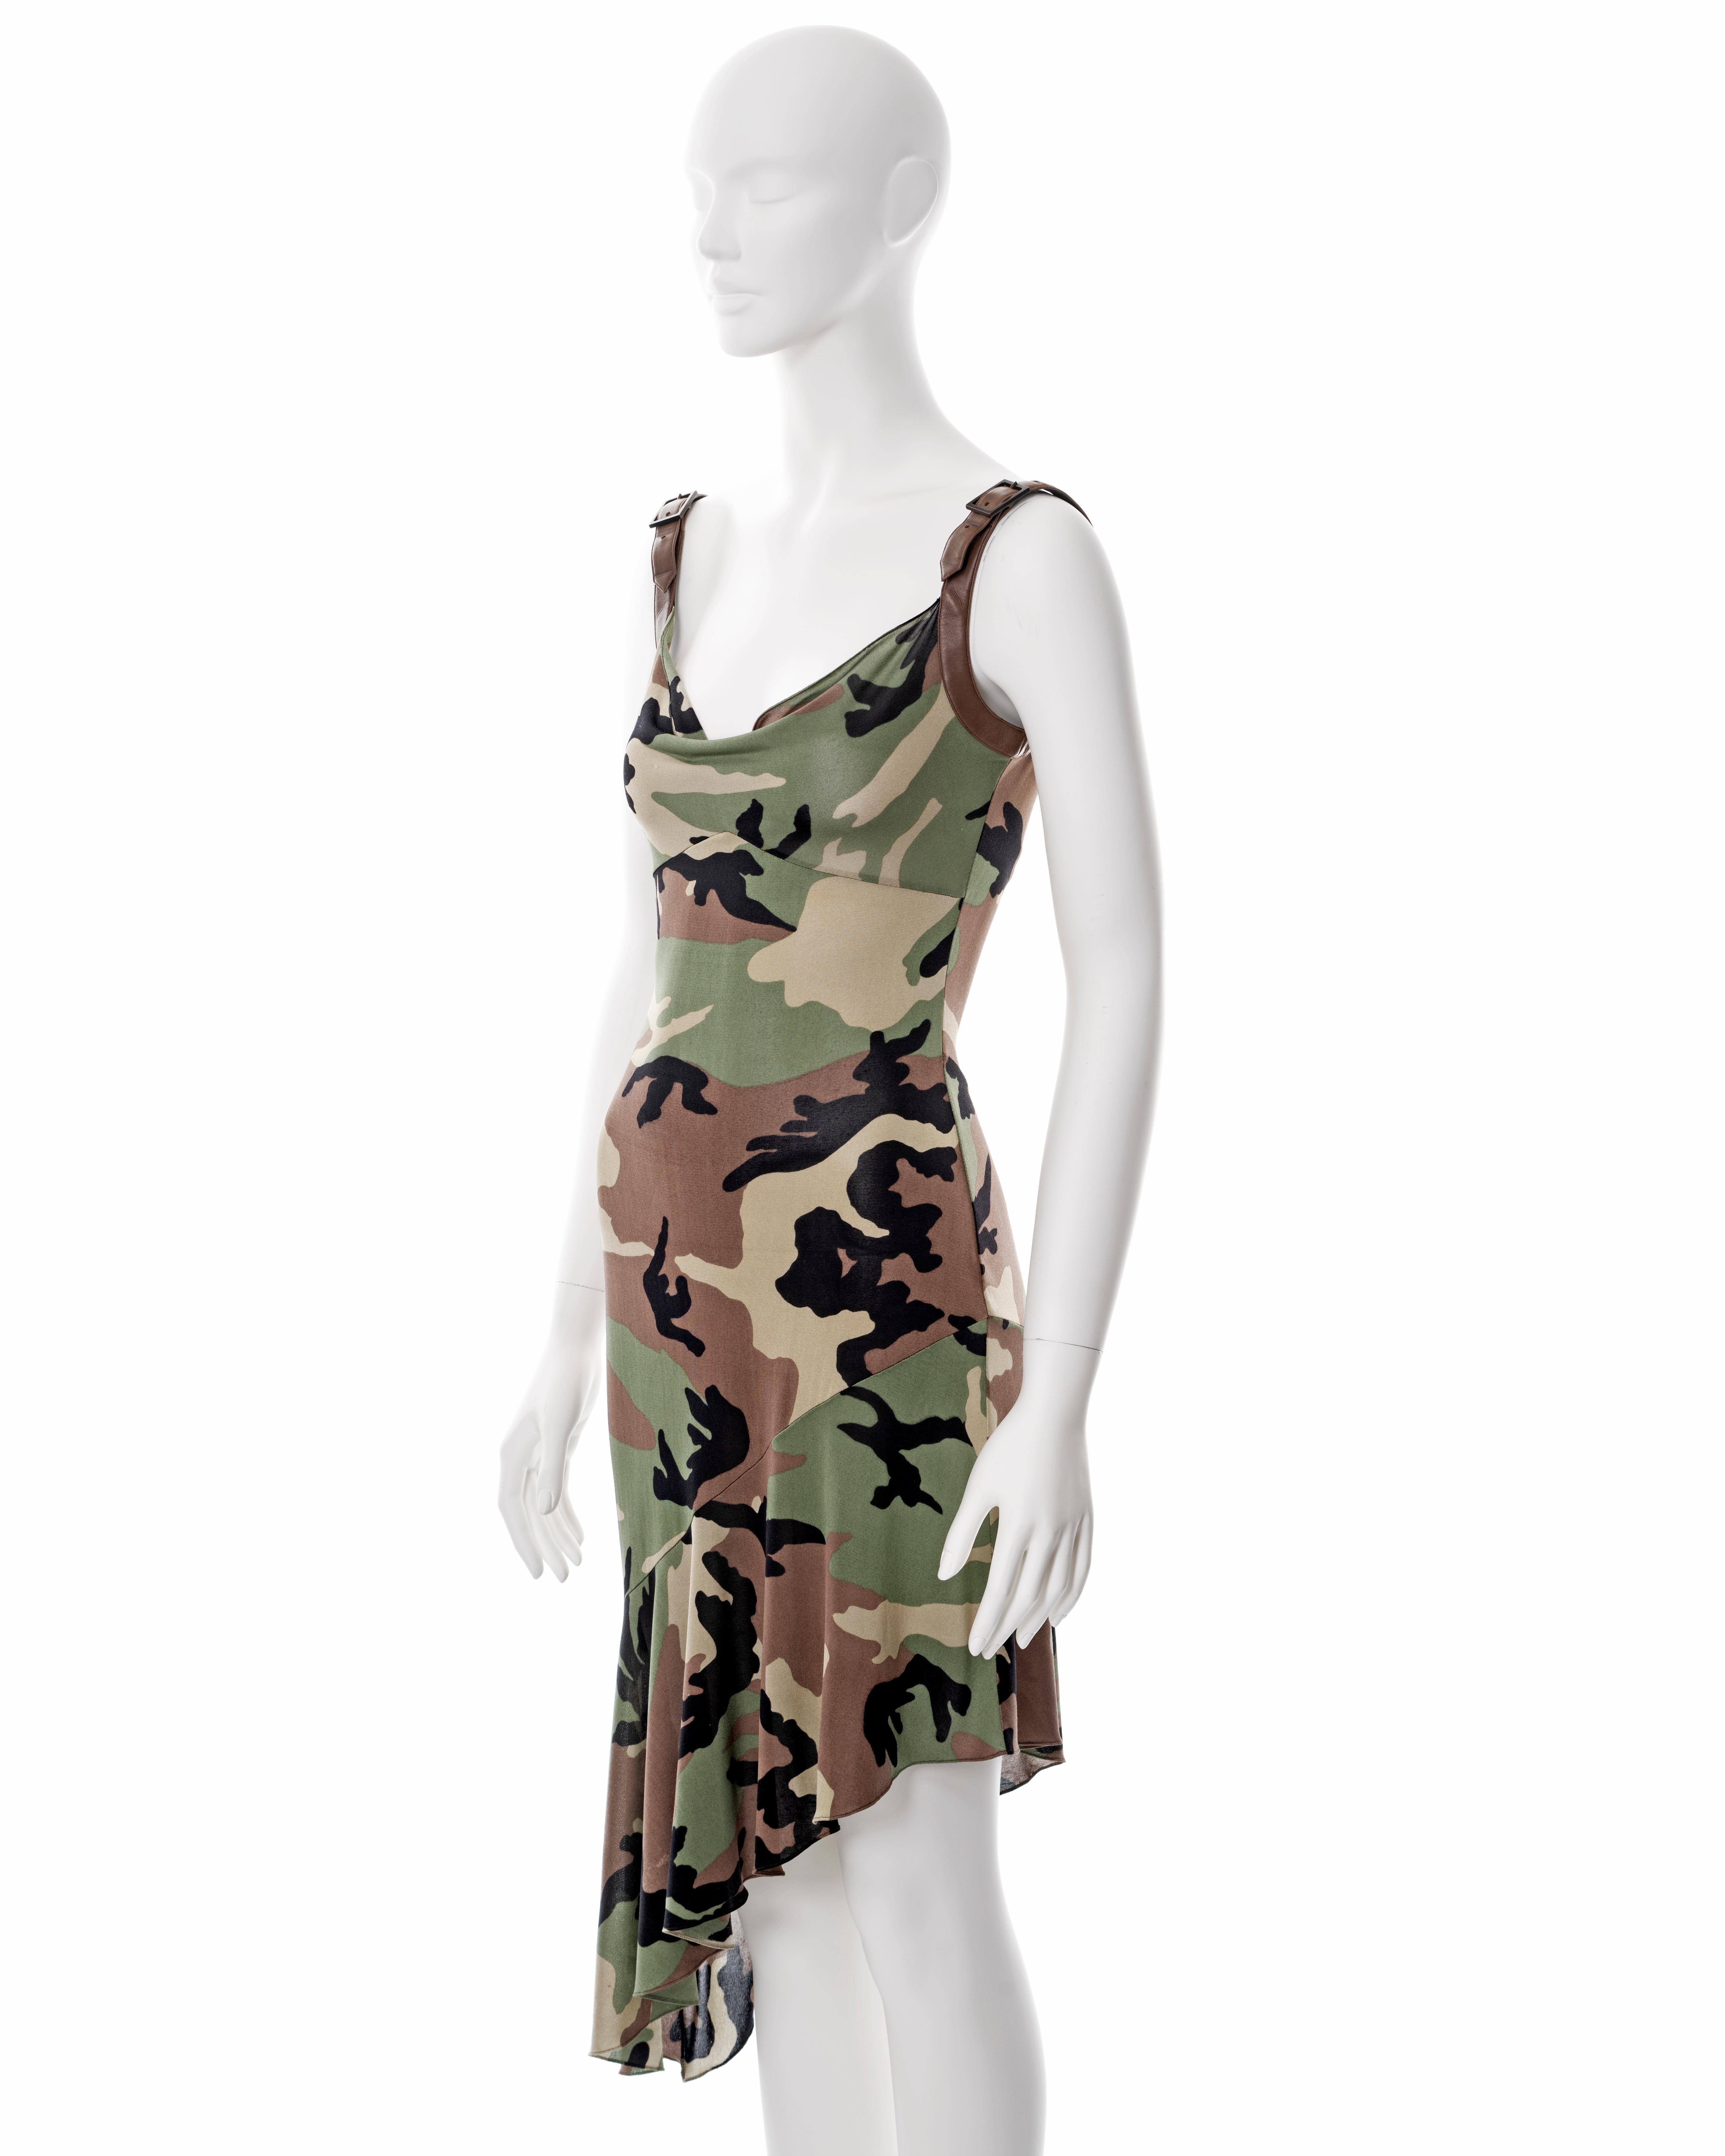 Christian Dior by John Galliano camo printed silk jersey bias cut dress, ss 2001 For Sale 5